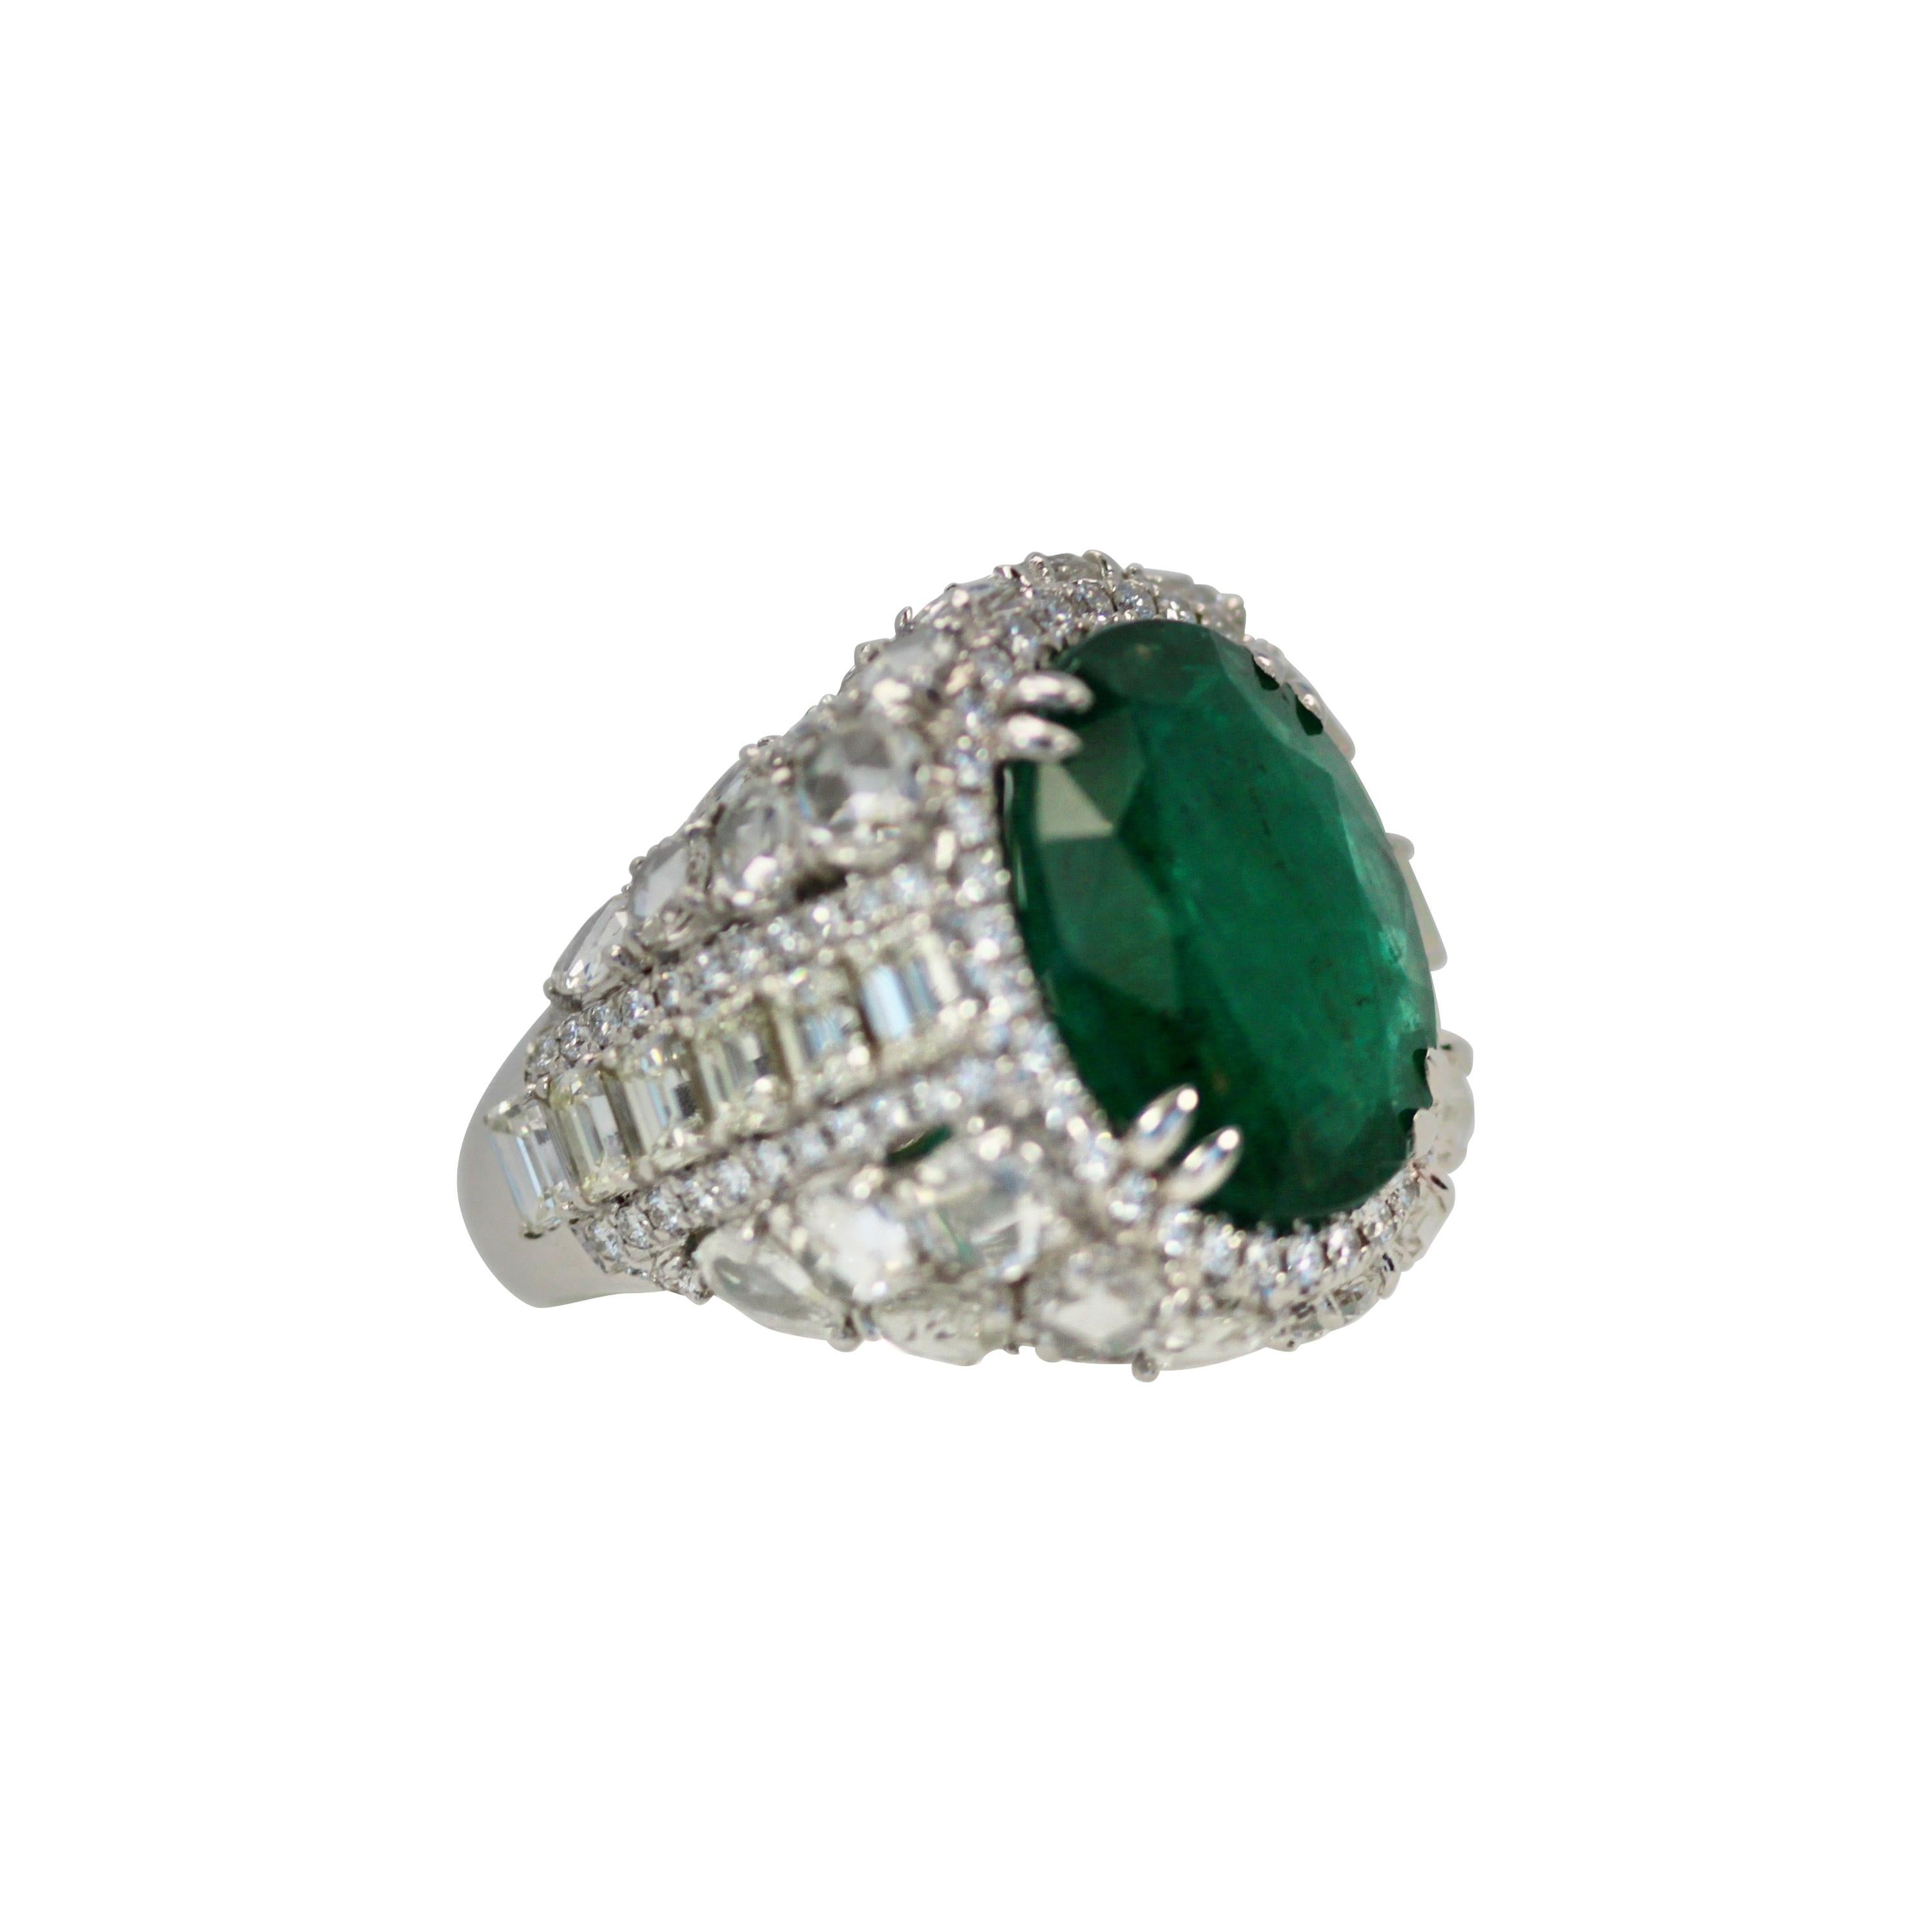 Oval Emerald 12.25 Carat Diamond Surround 8.85 Carat Total Weight 21.10 Carat For Sale